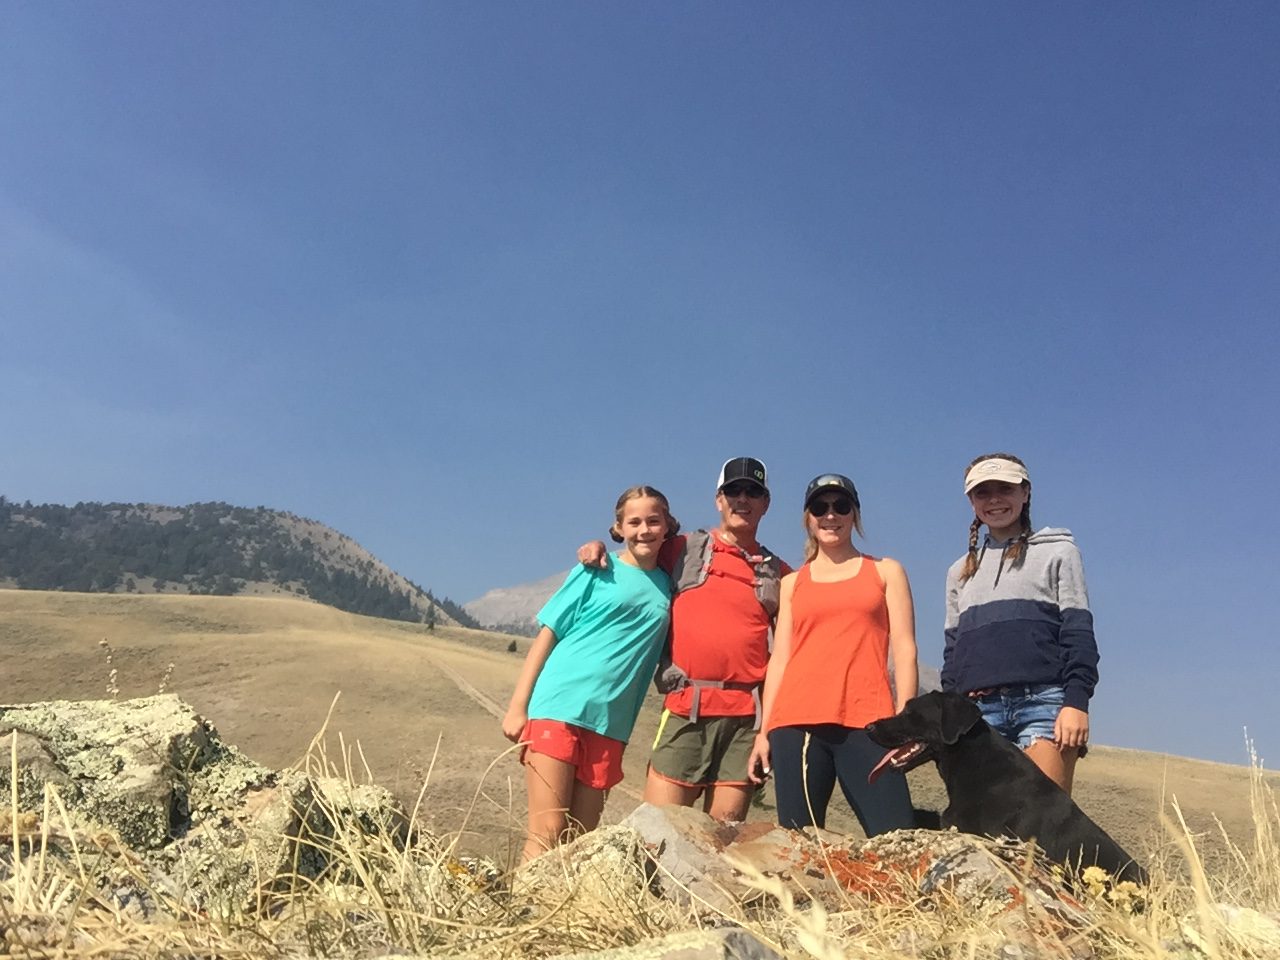 Kelly and his family at the Diamond Peak trailhead—119 miles to go.